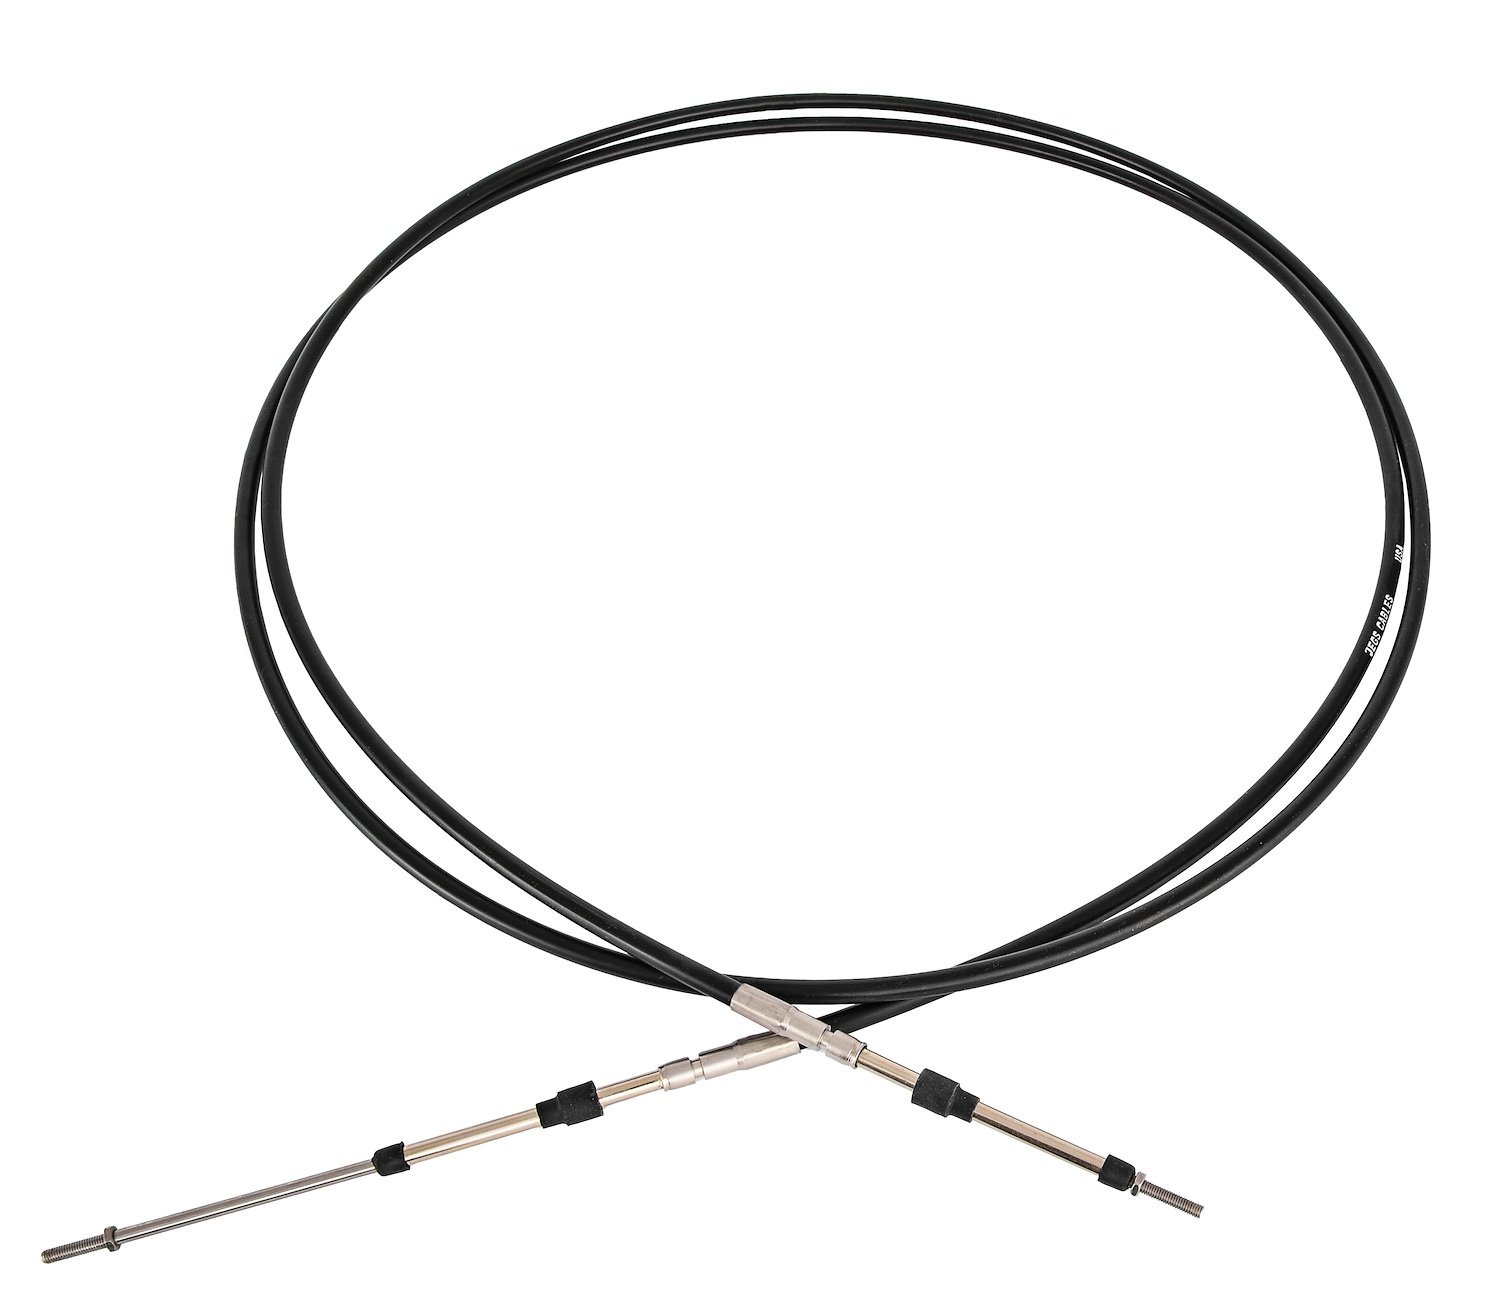 Morse Push/Pull Cable Length: 9 ft. Long